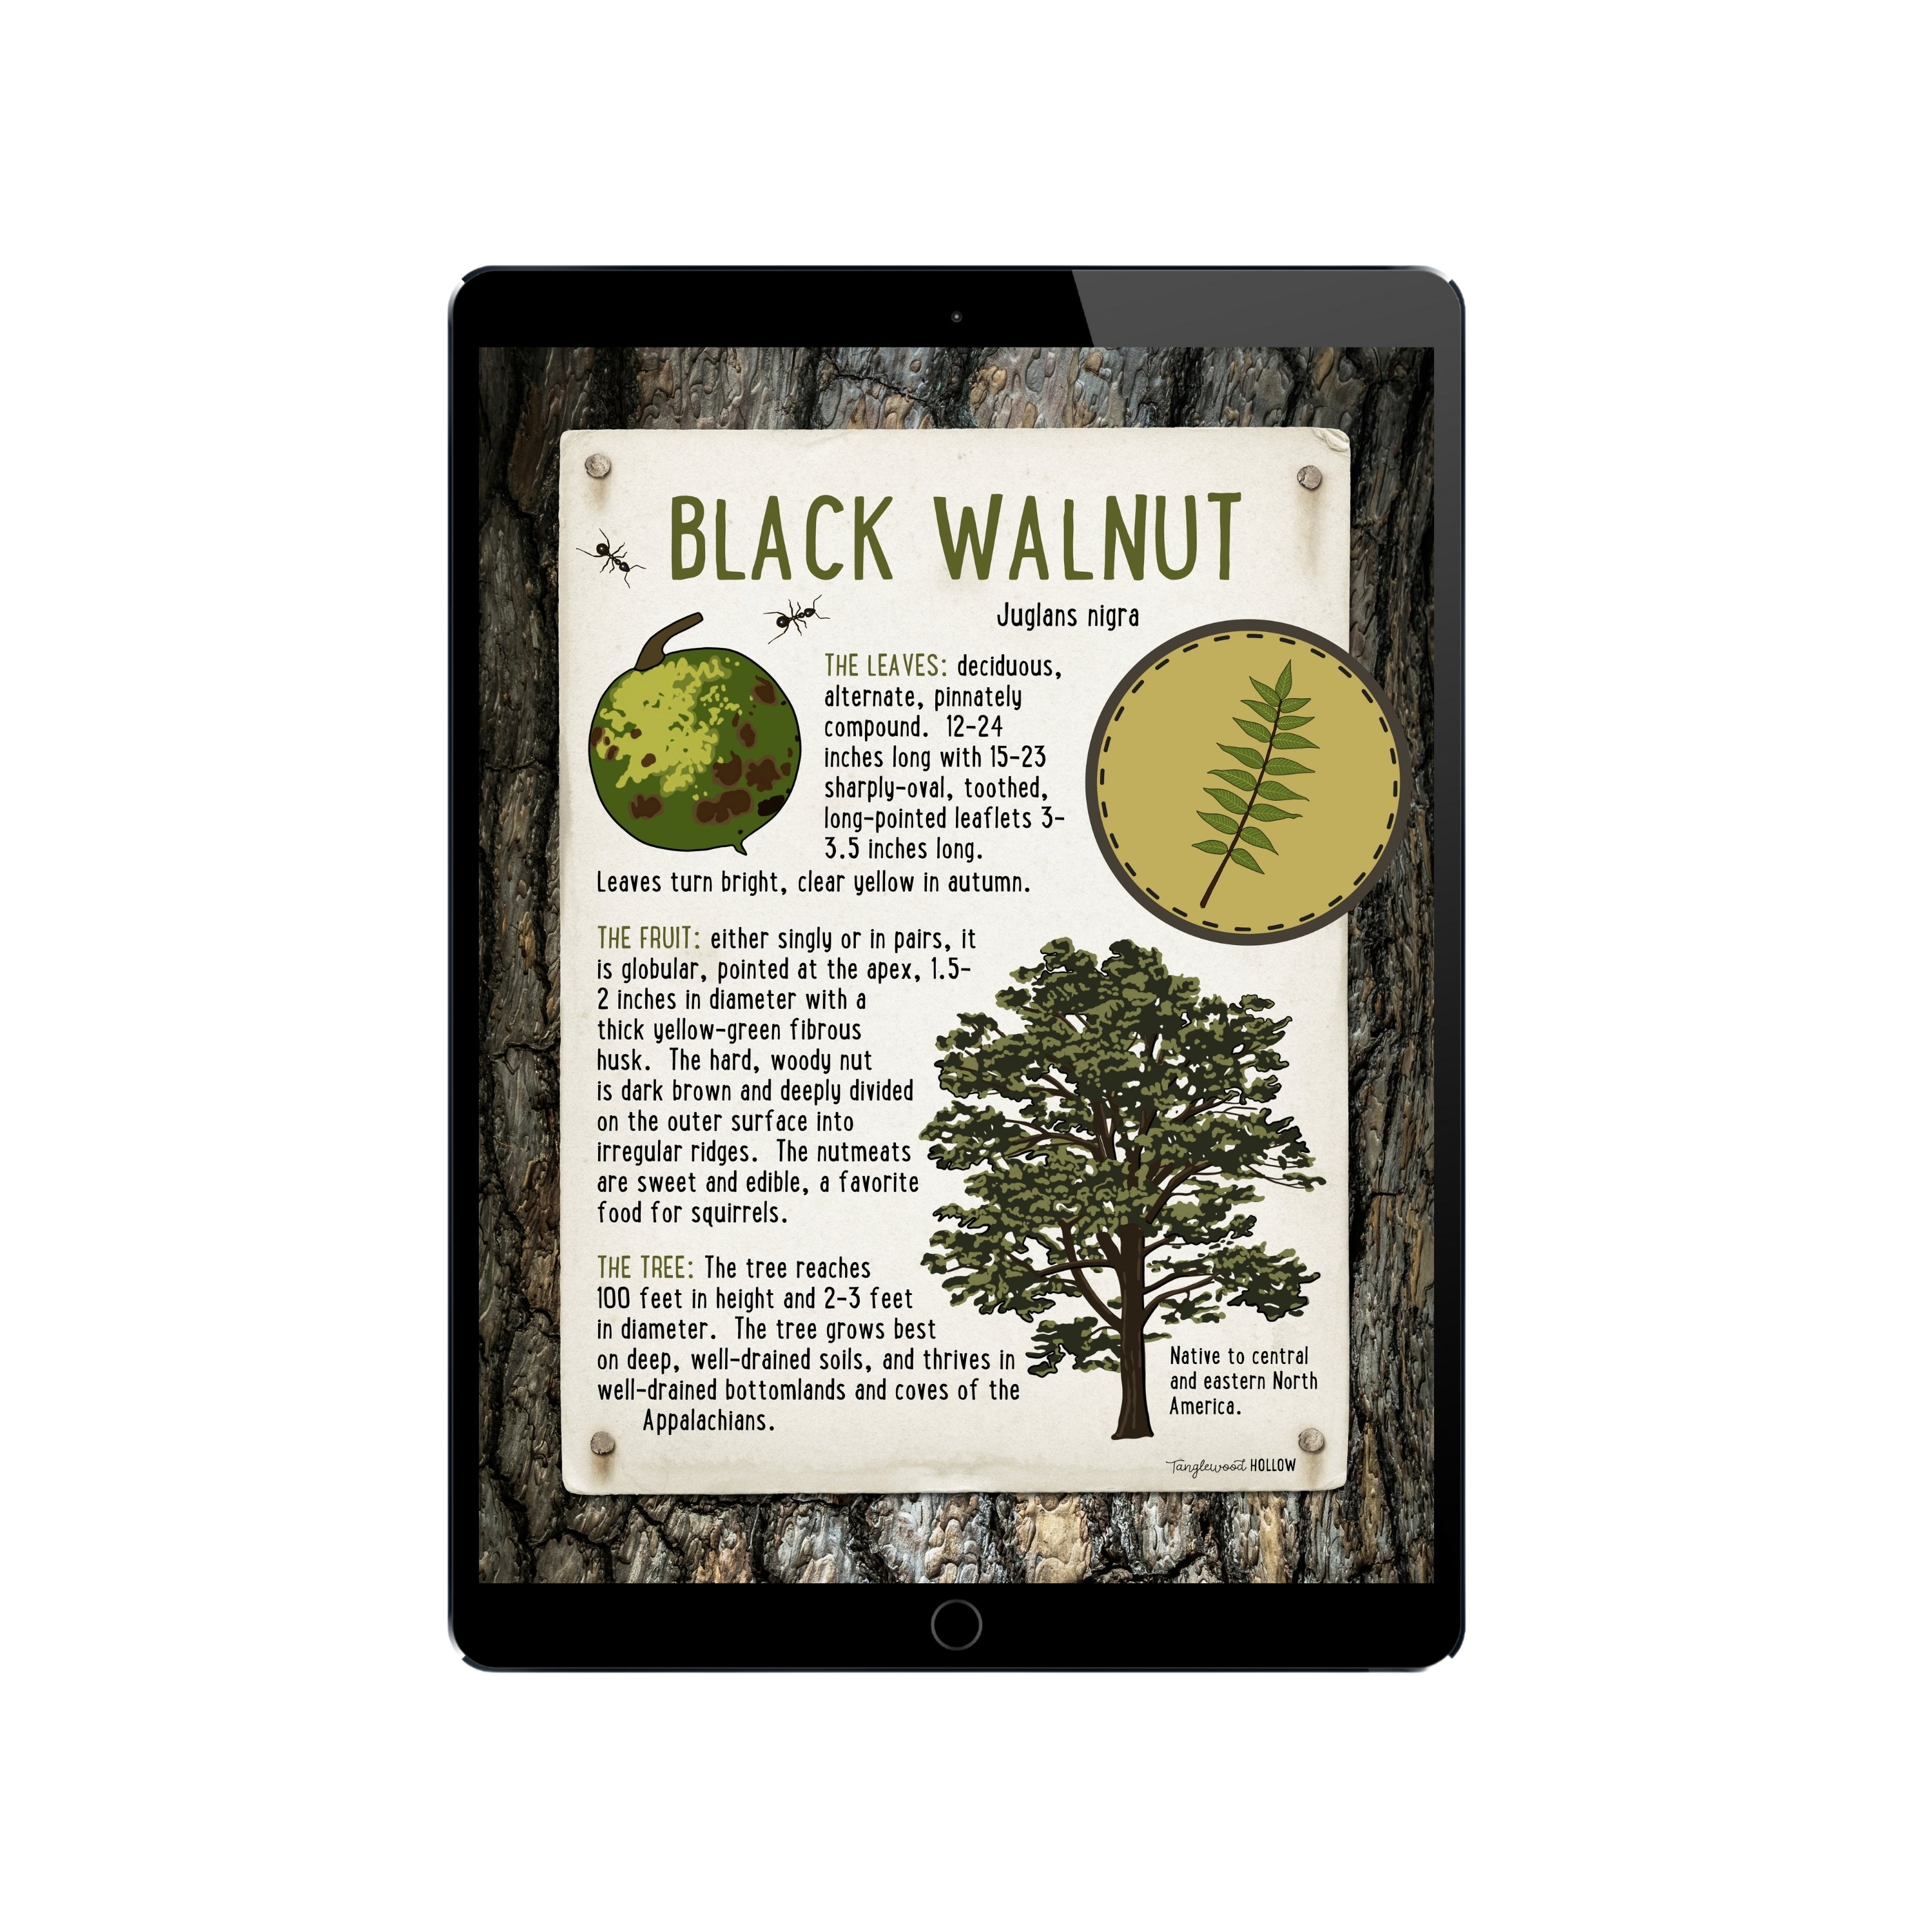 Exploring Black Walnut - A Digital Guide